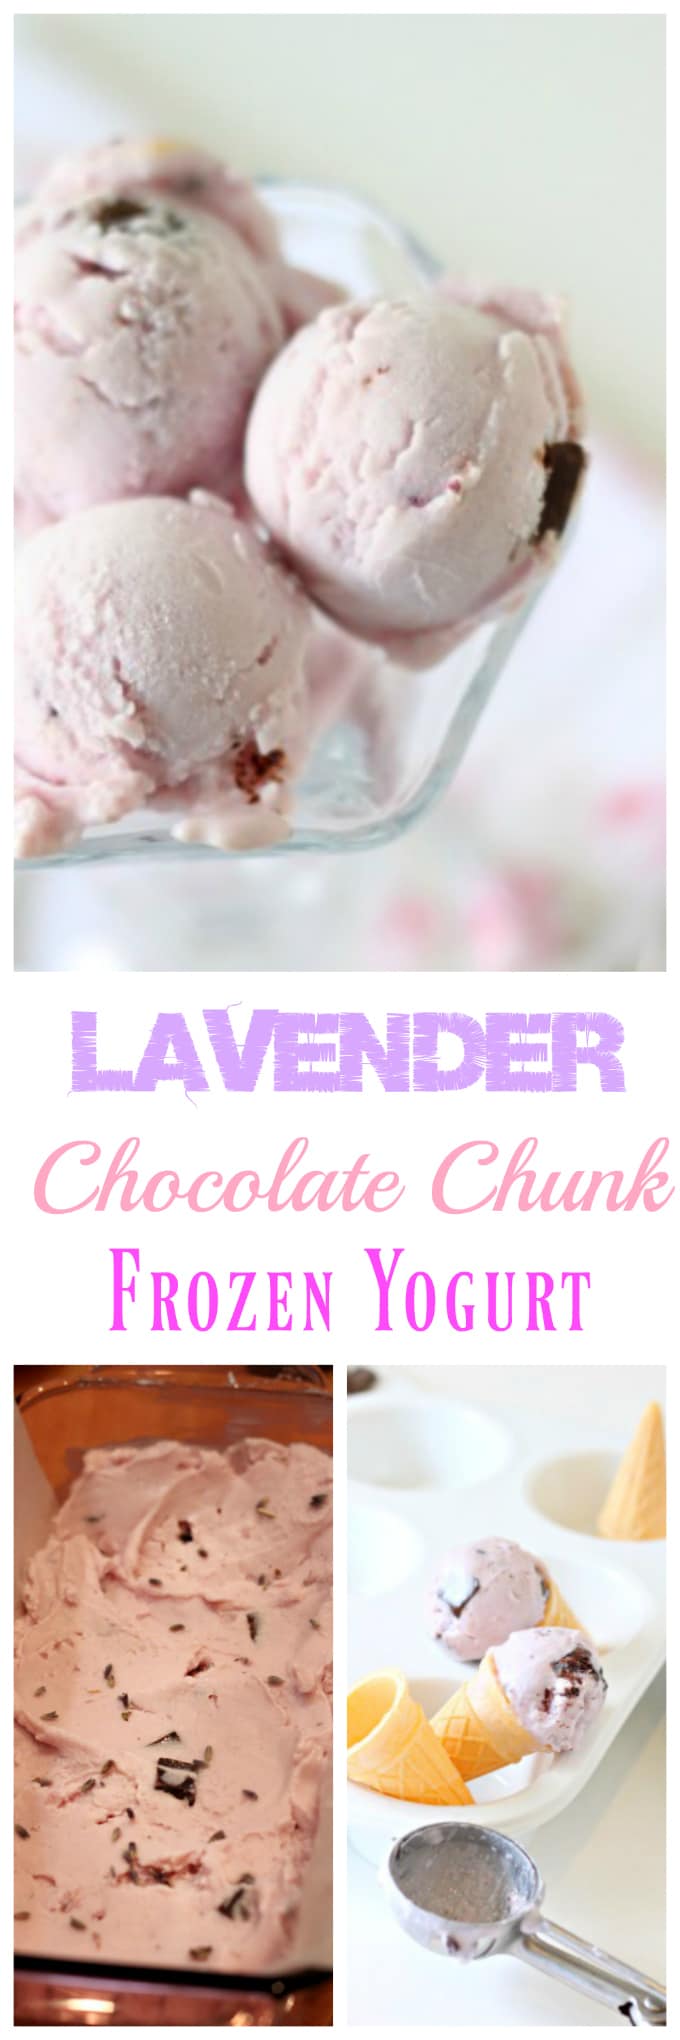 lavender chocolate chunk frozen yogurt @createdbydiane